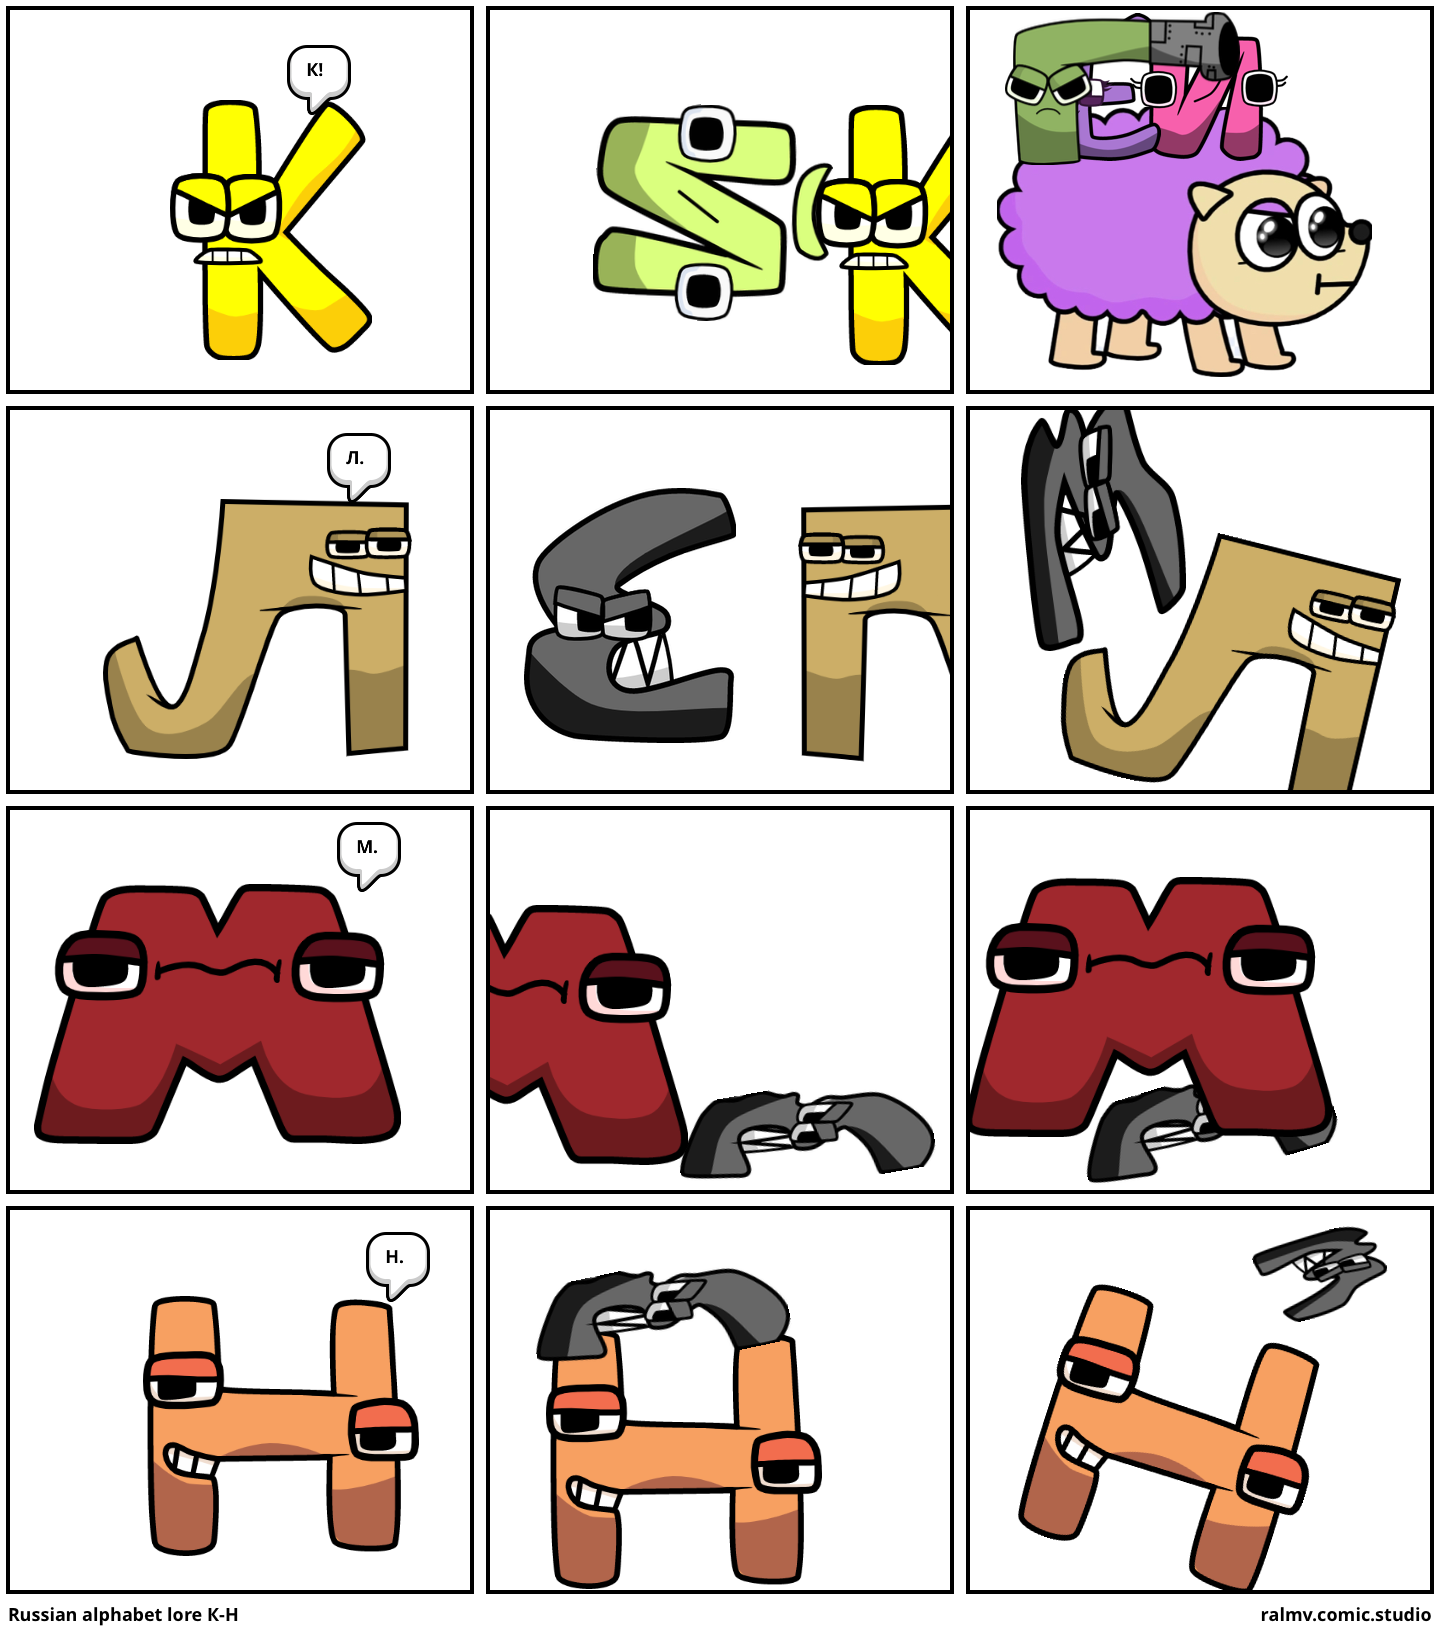 Russian alphabet lore К-Н - Comic Studio